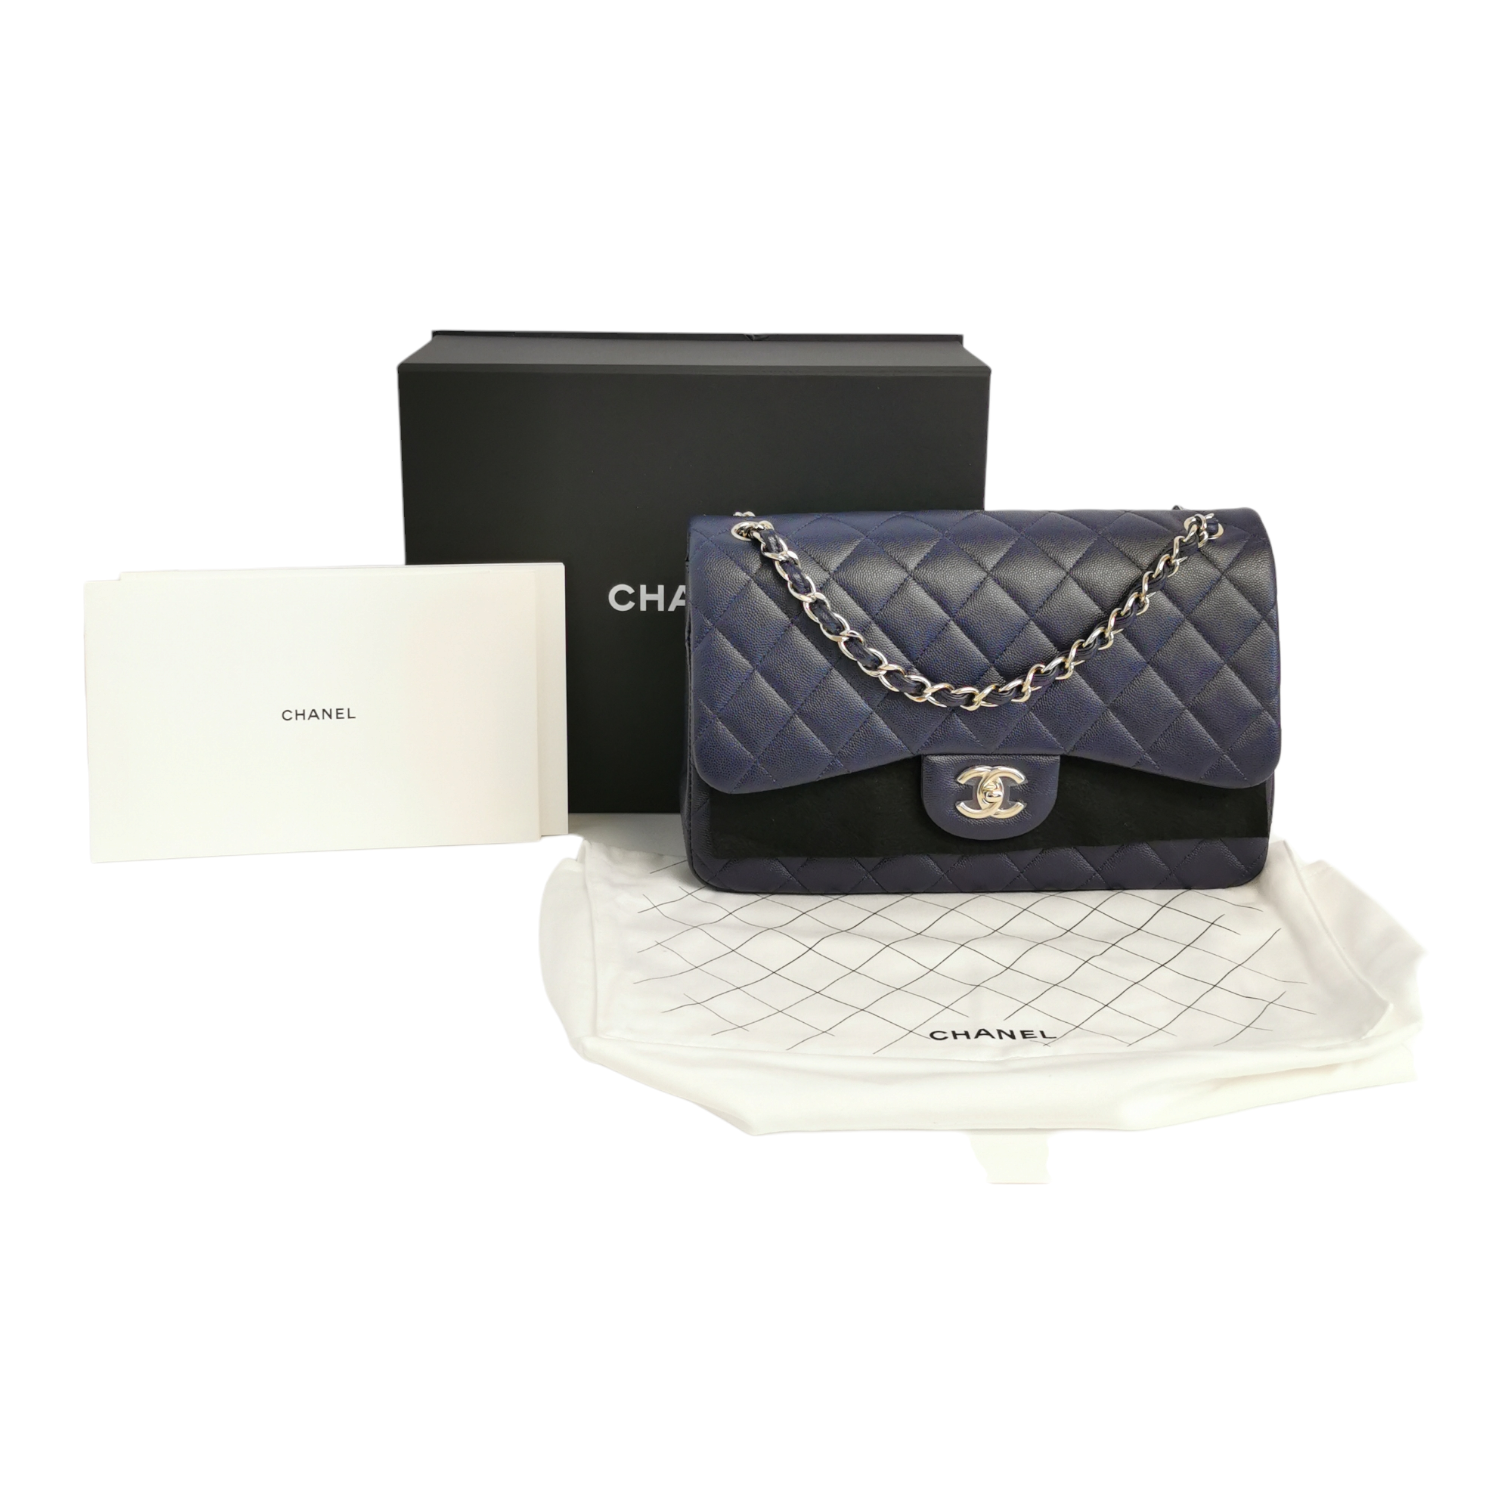 Chanel Jumbo Classic Double Flap Shoulder Bag Blue Leather - Allu USA